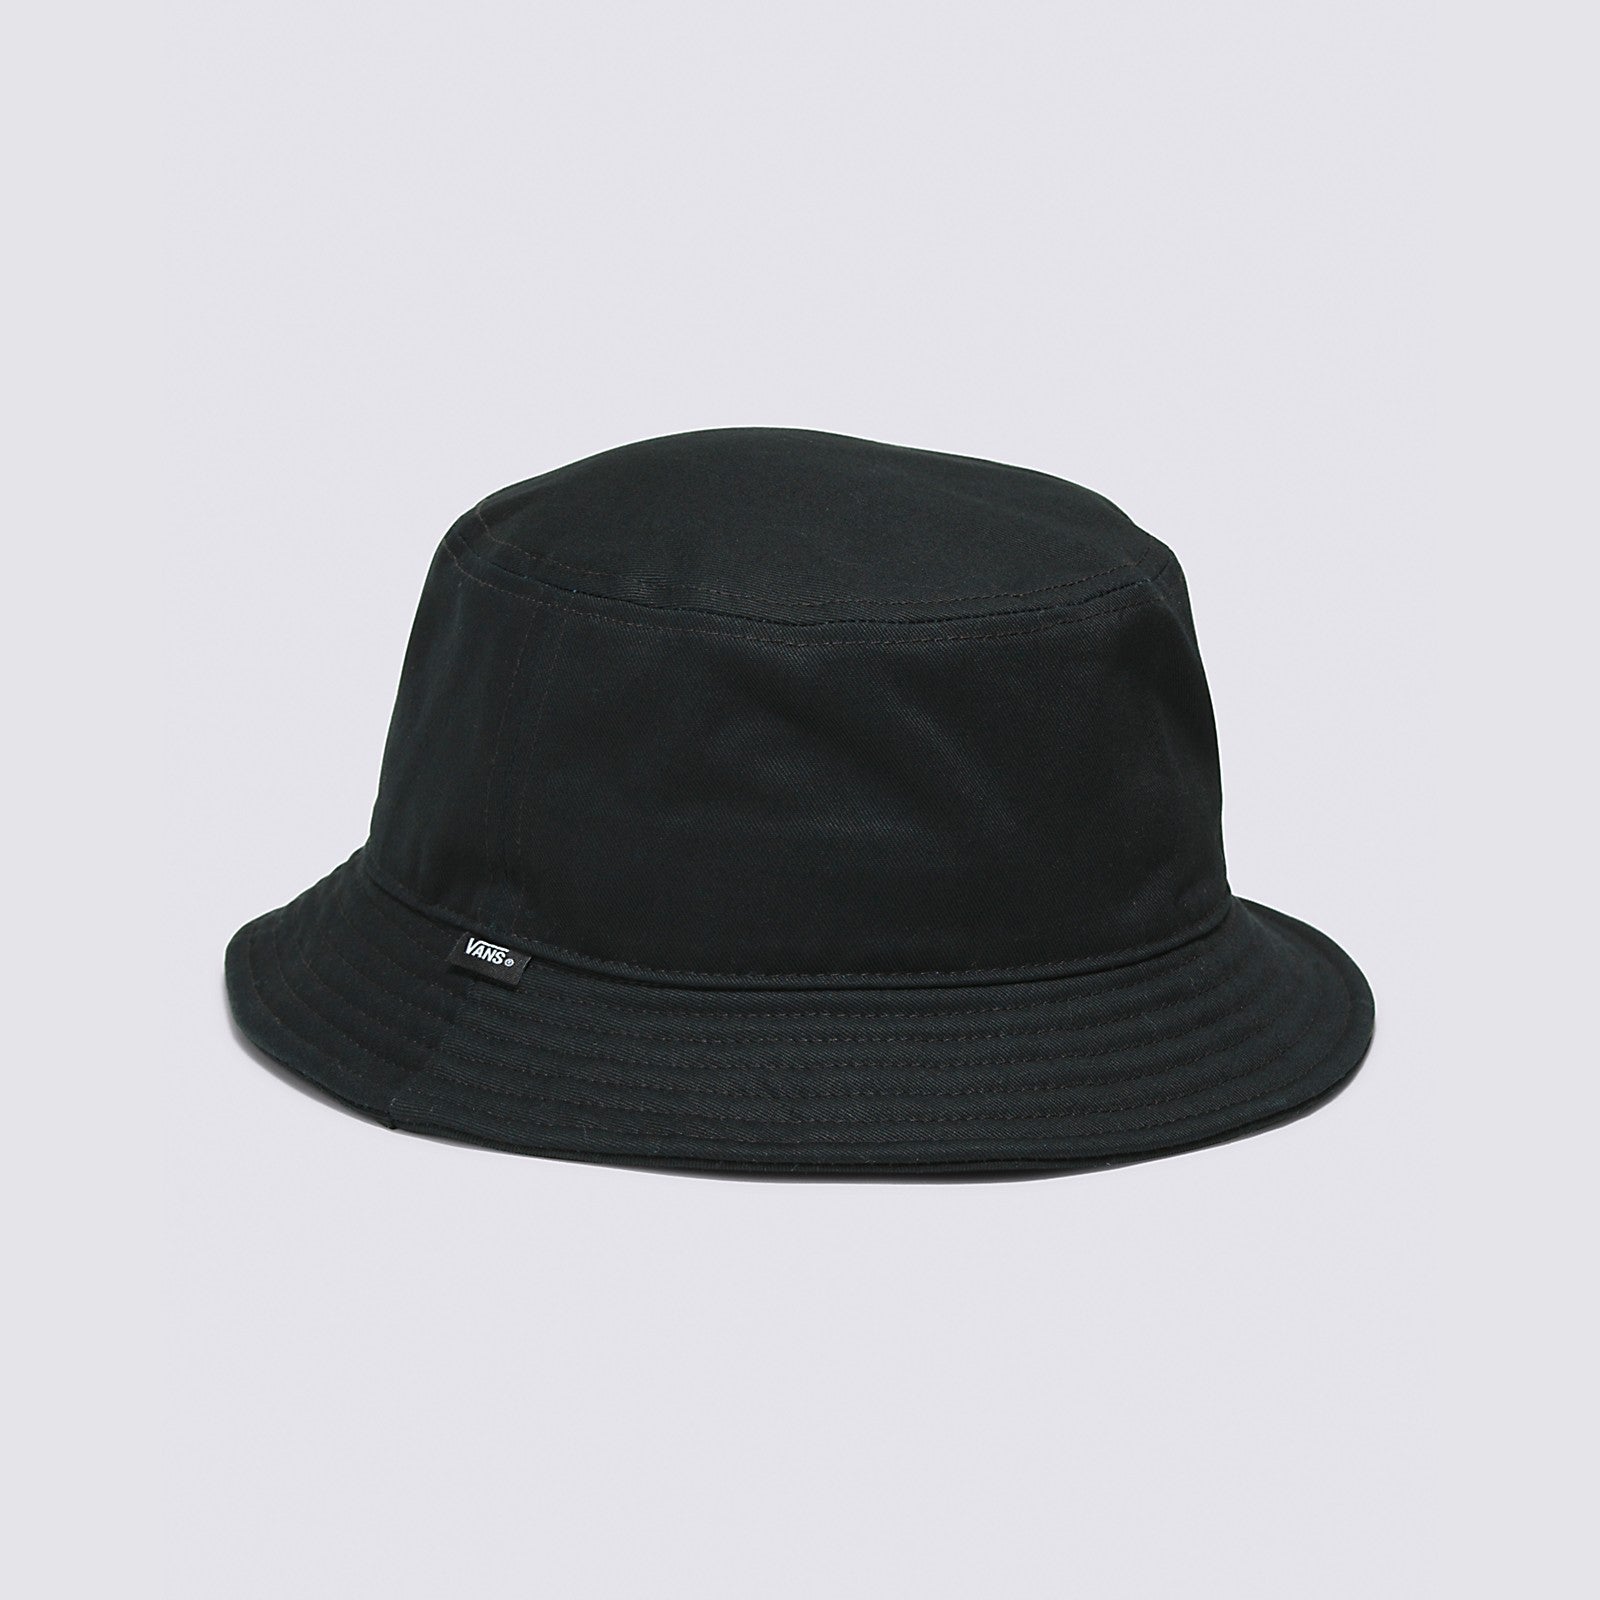 APLAZE | Vans Patch Bucket Hat Black VN0A7S96BLK